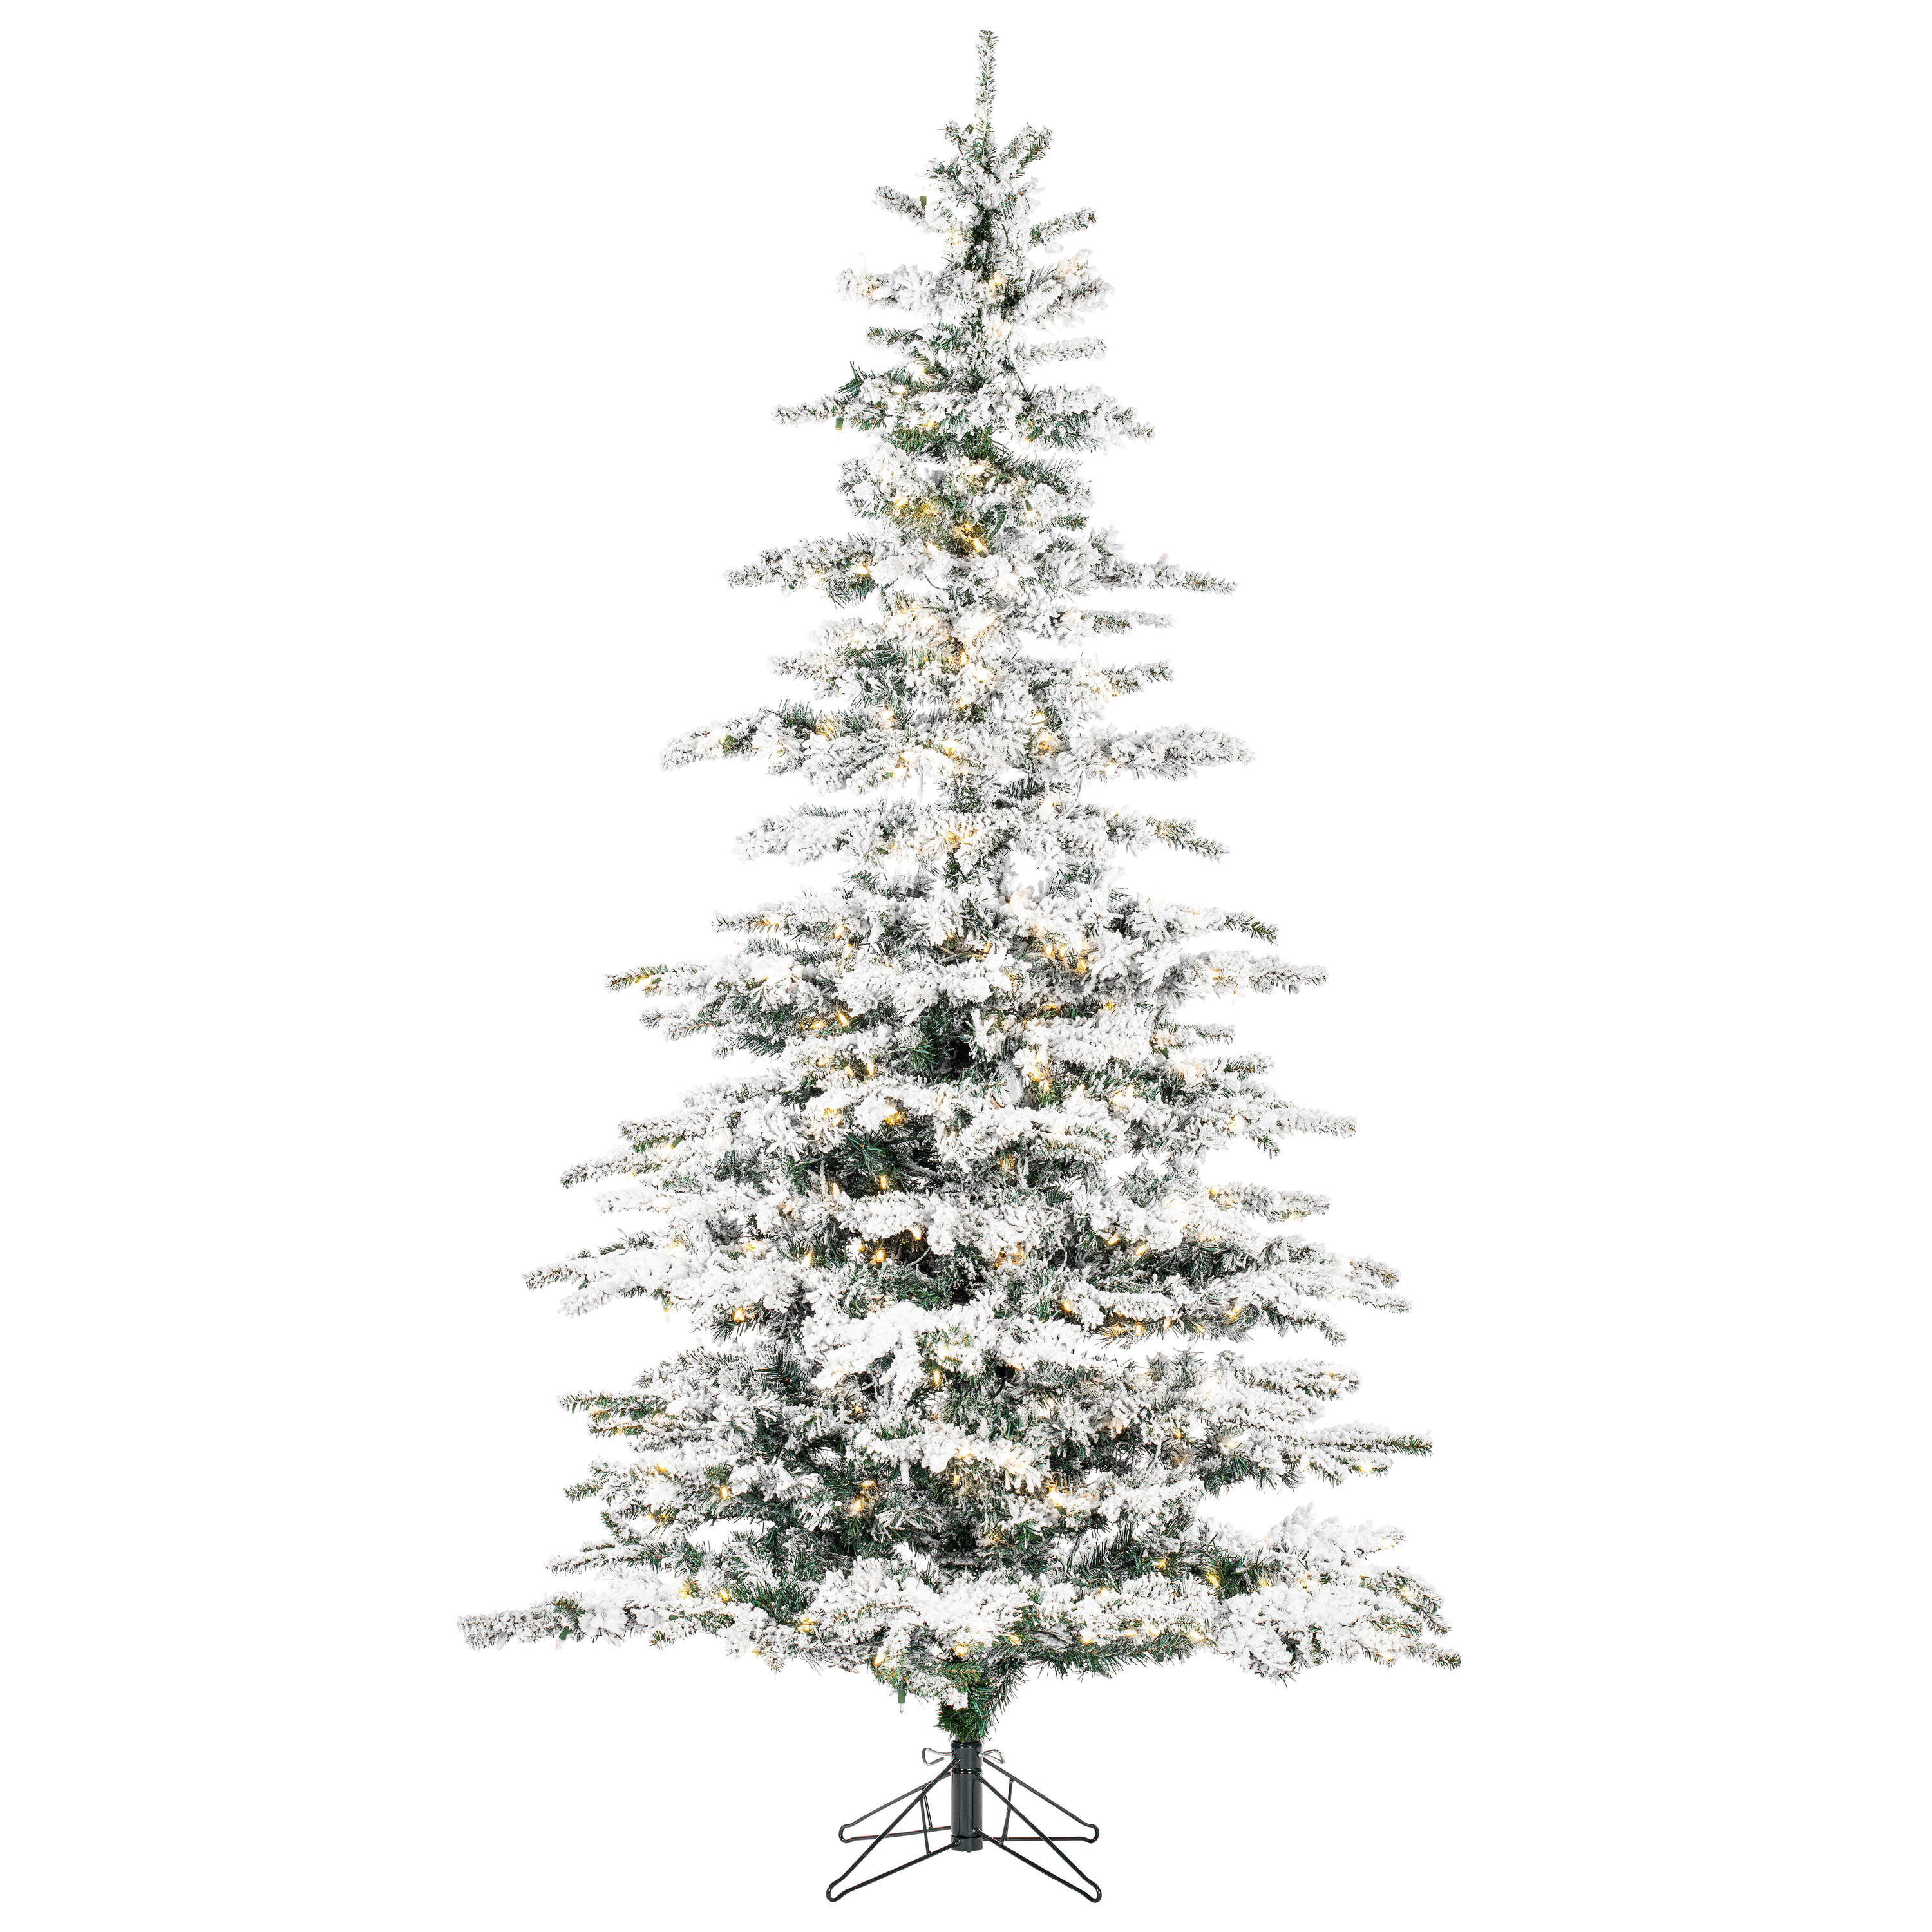  Vixen Light Angel Artificial Christmas Tree, Pre-Lit & LED (4  Feet Tall), Christmas Decoration : Home & Kitchen